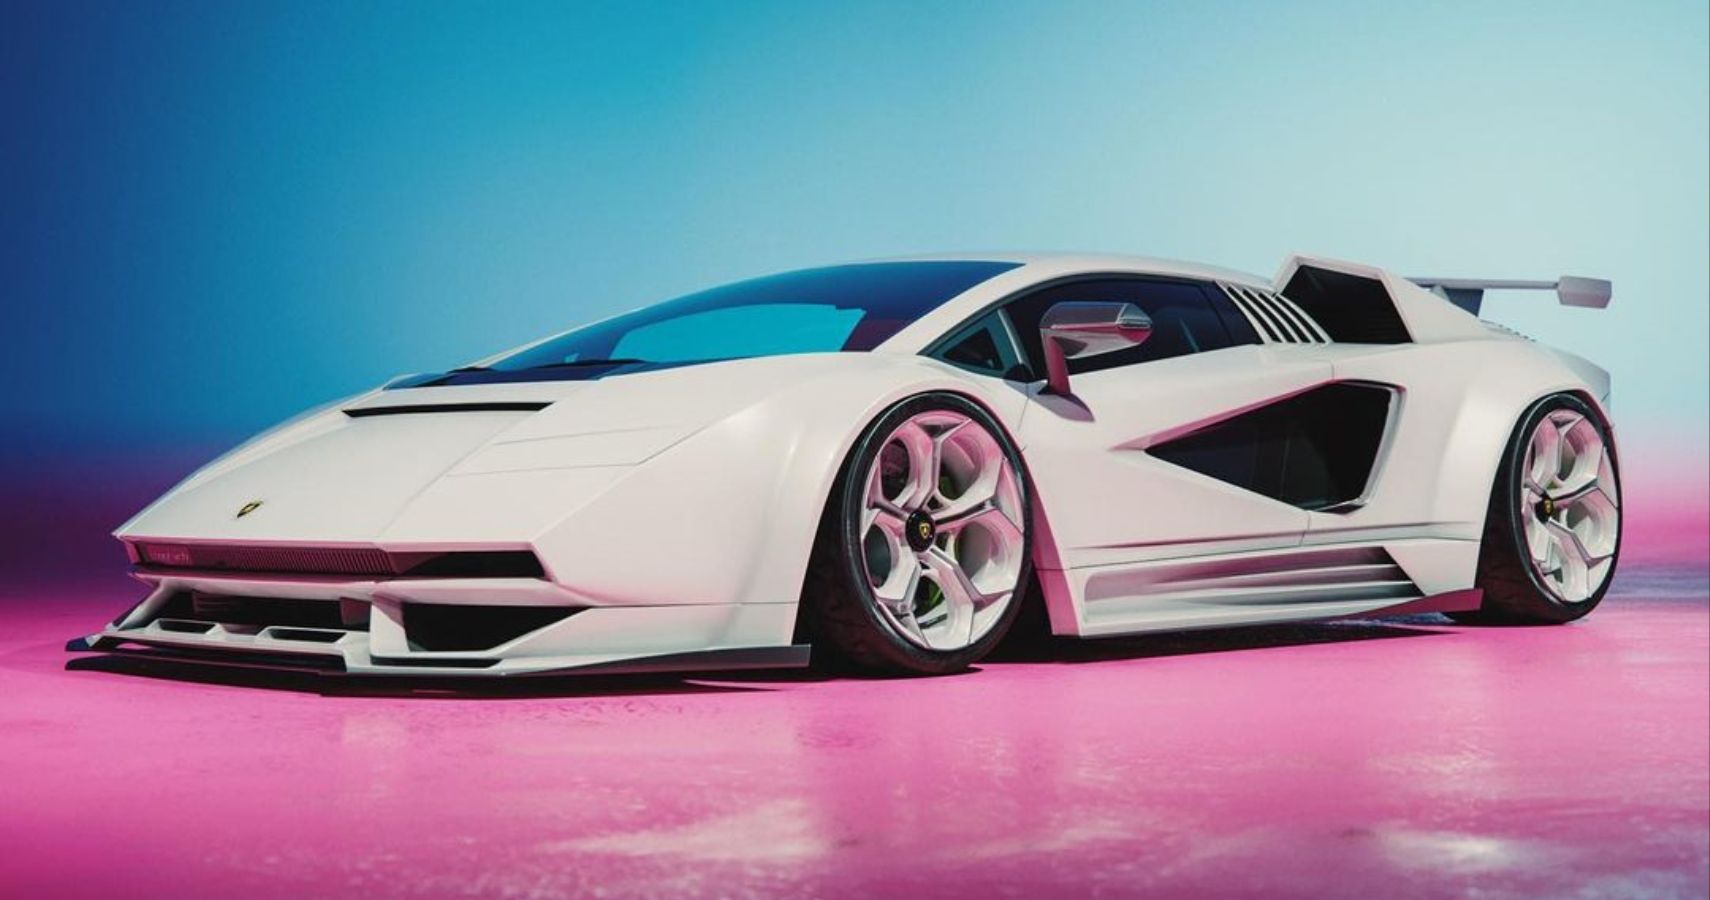 Lamborghini Countach Redesign Render Featured Image